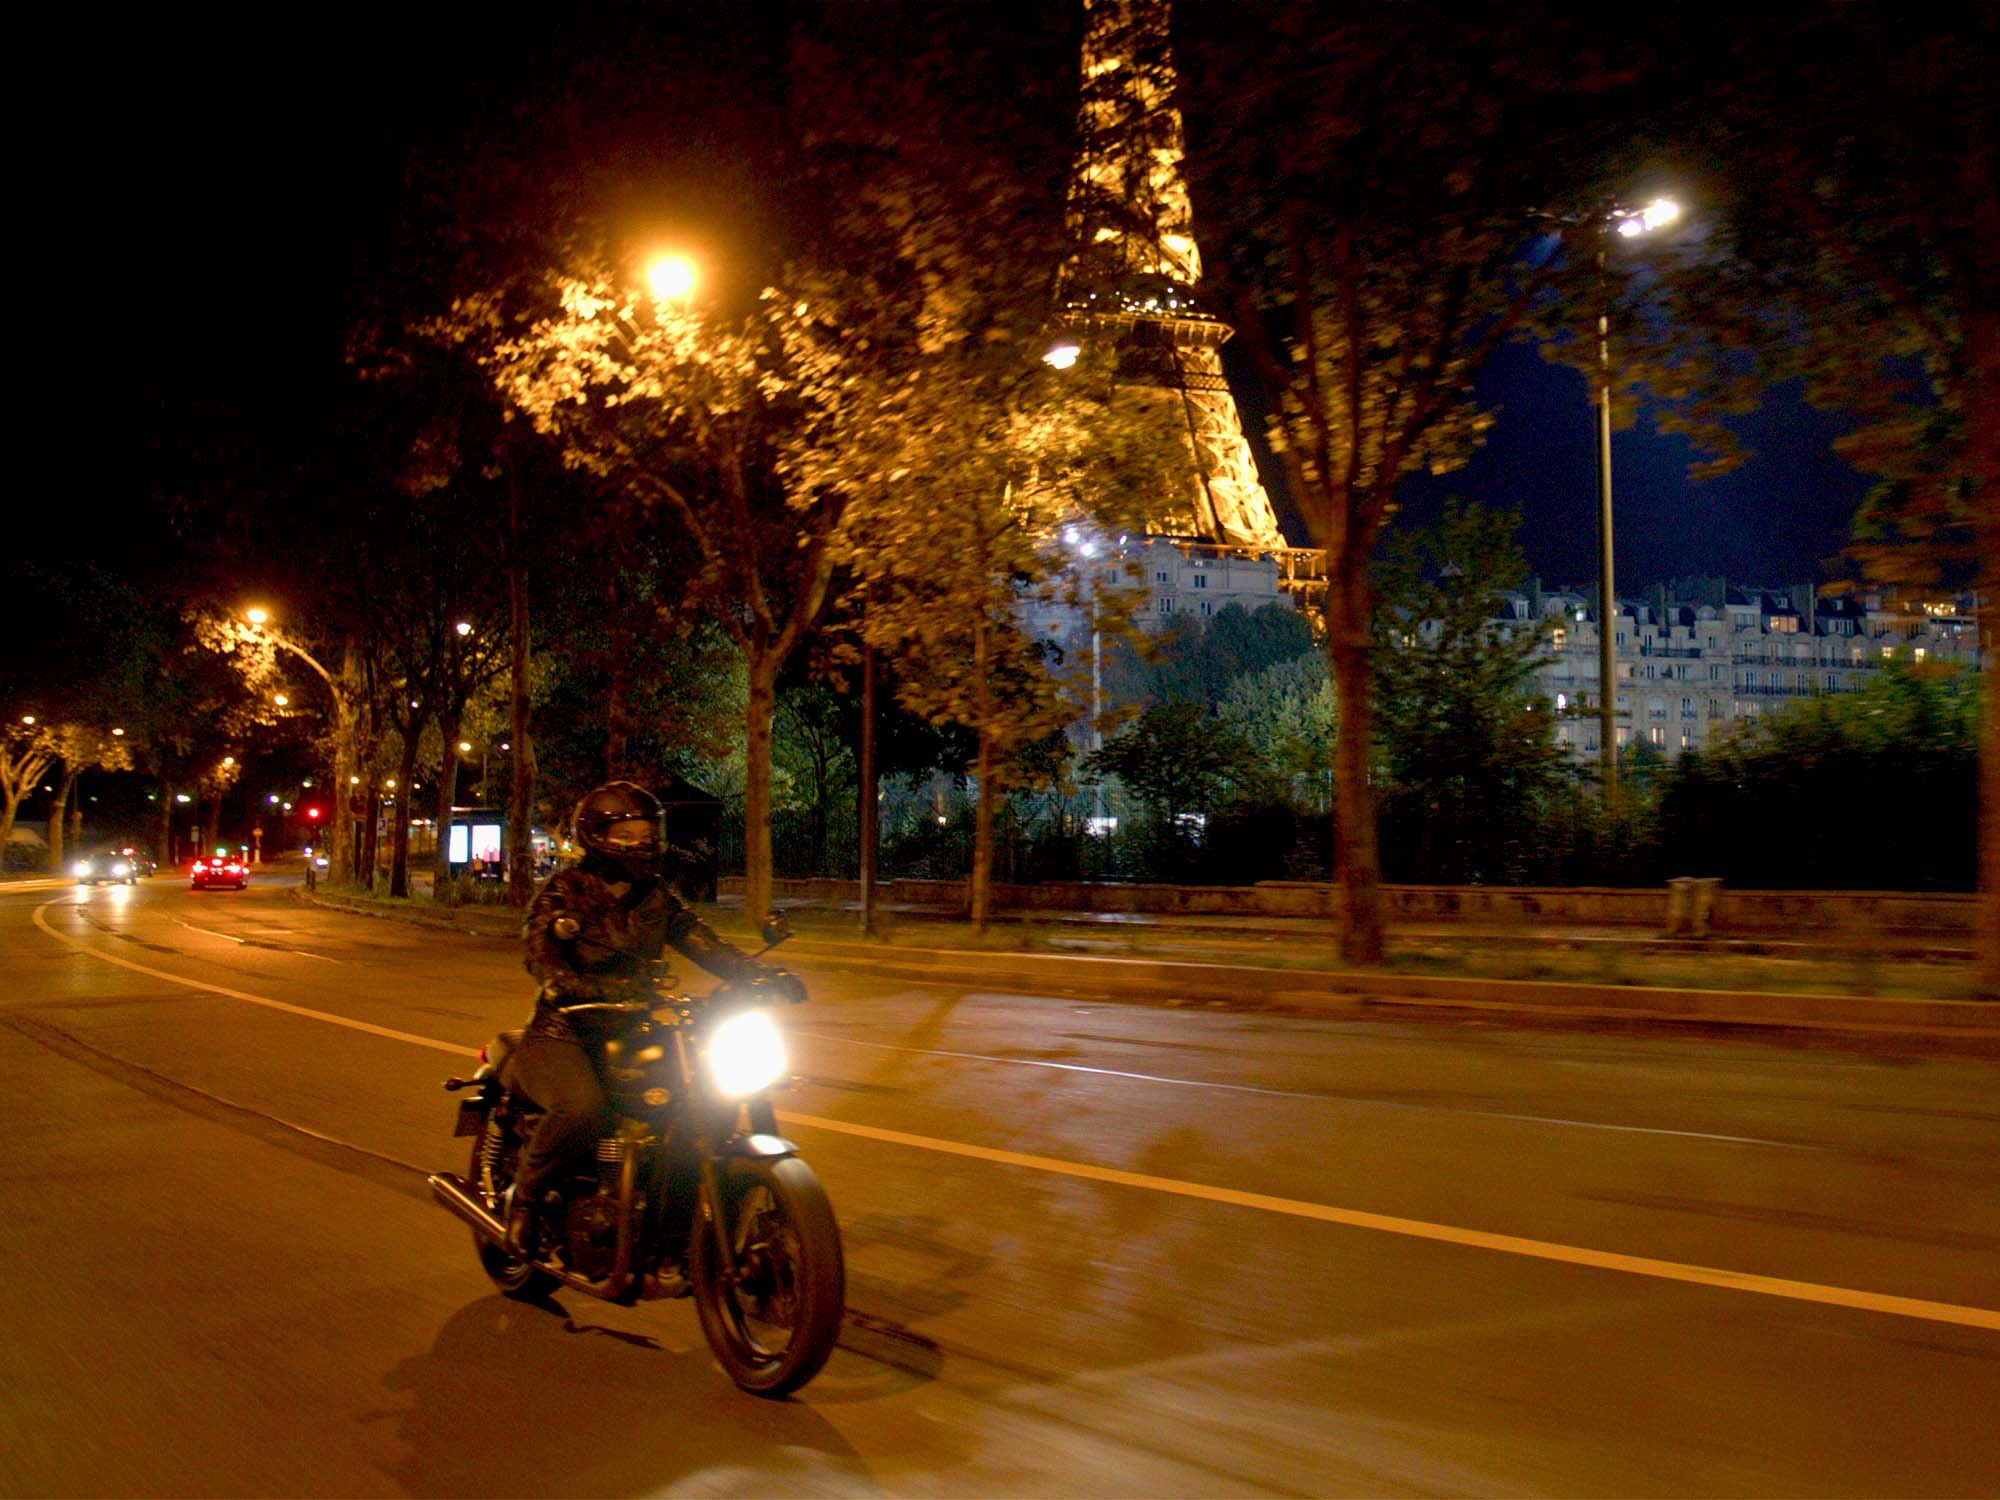 Paris Memories review – a poignant mediation on personal trauma